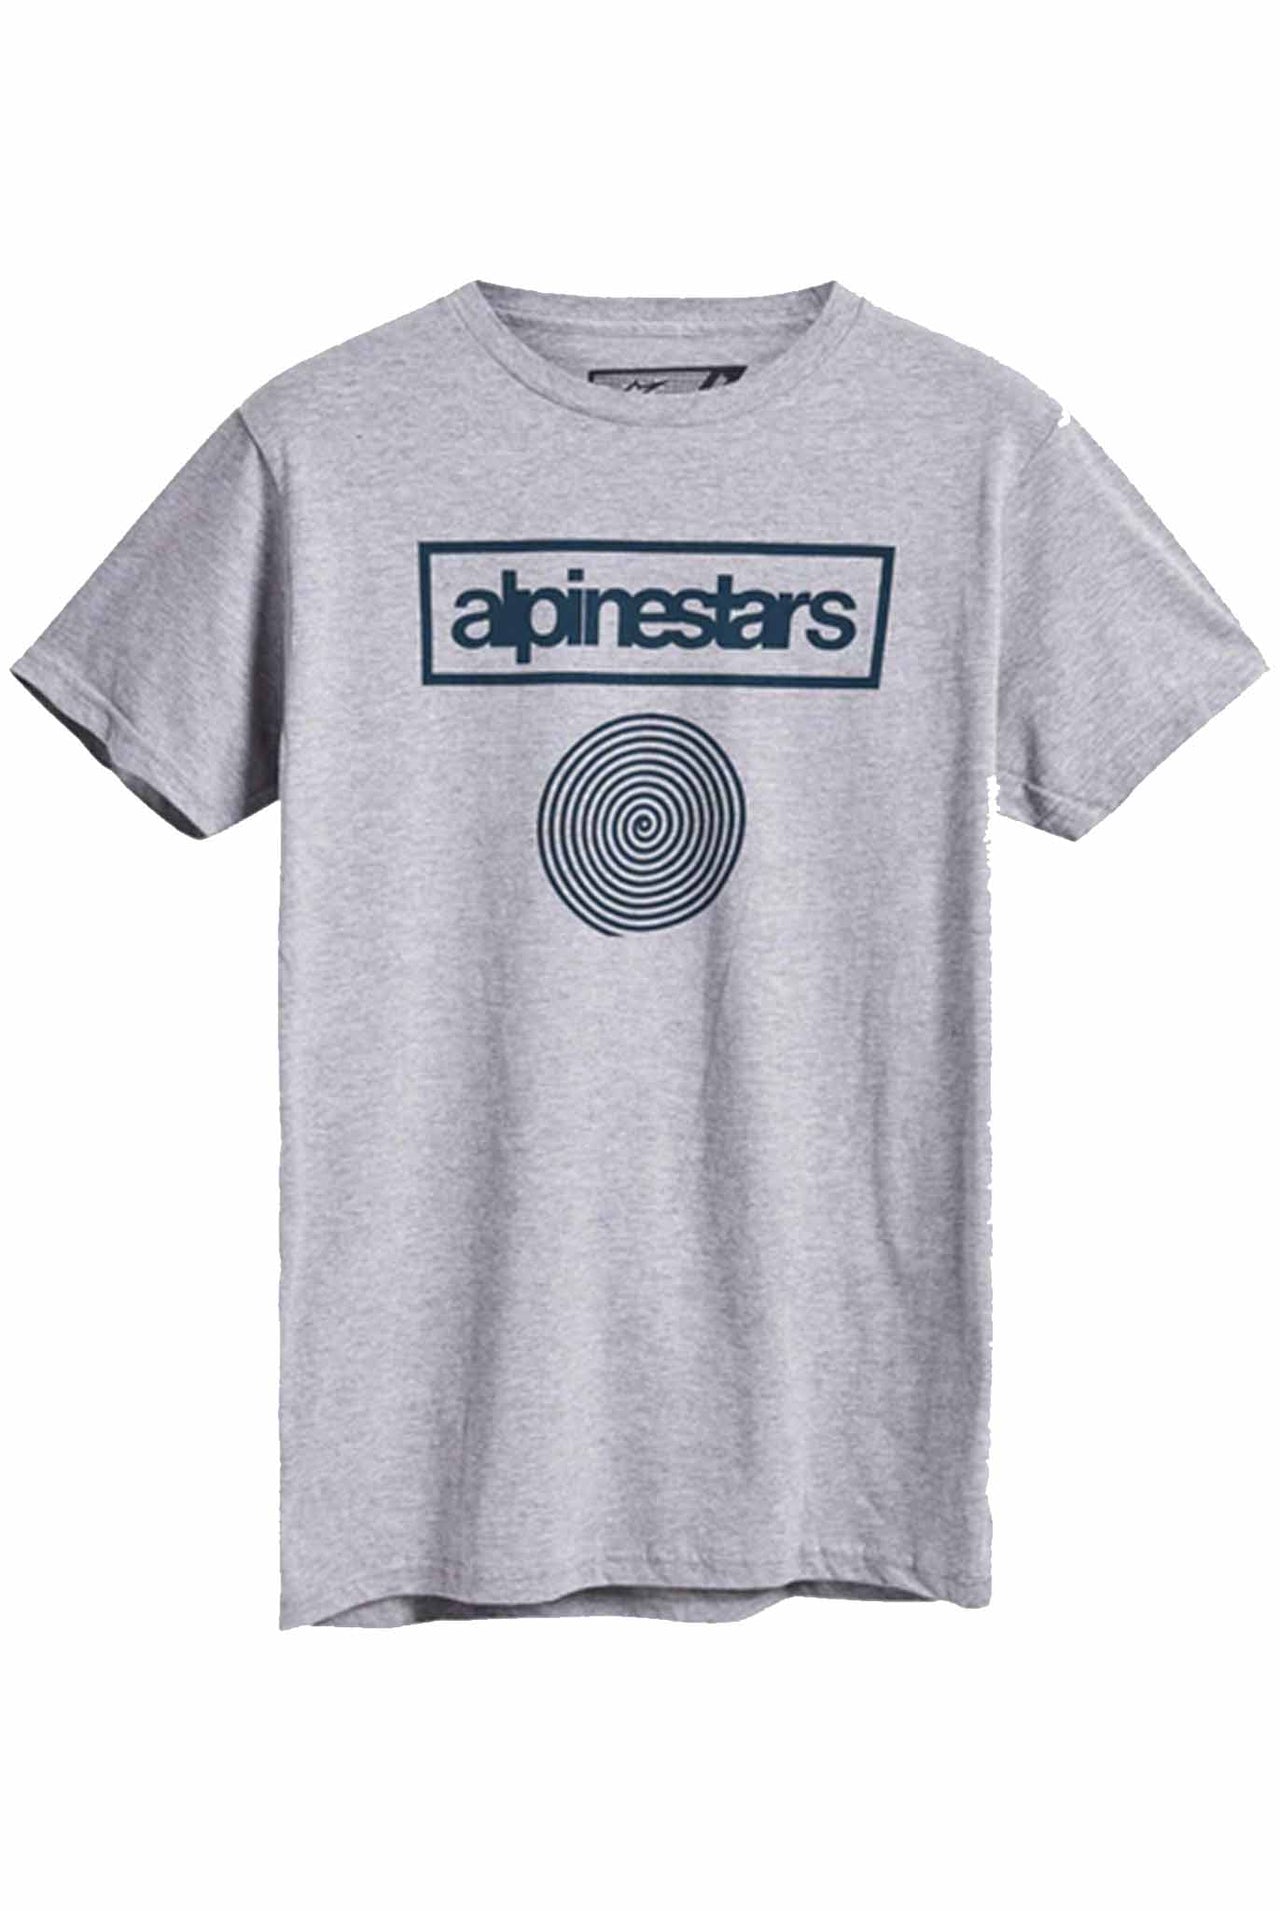 Camiseta Alpinestar Spun Gris